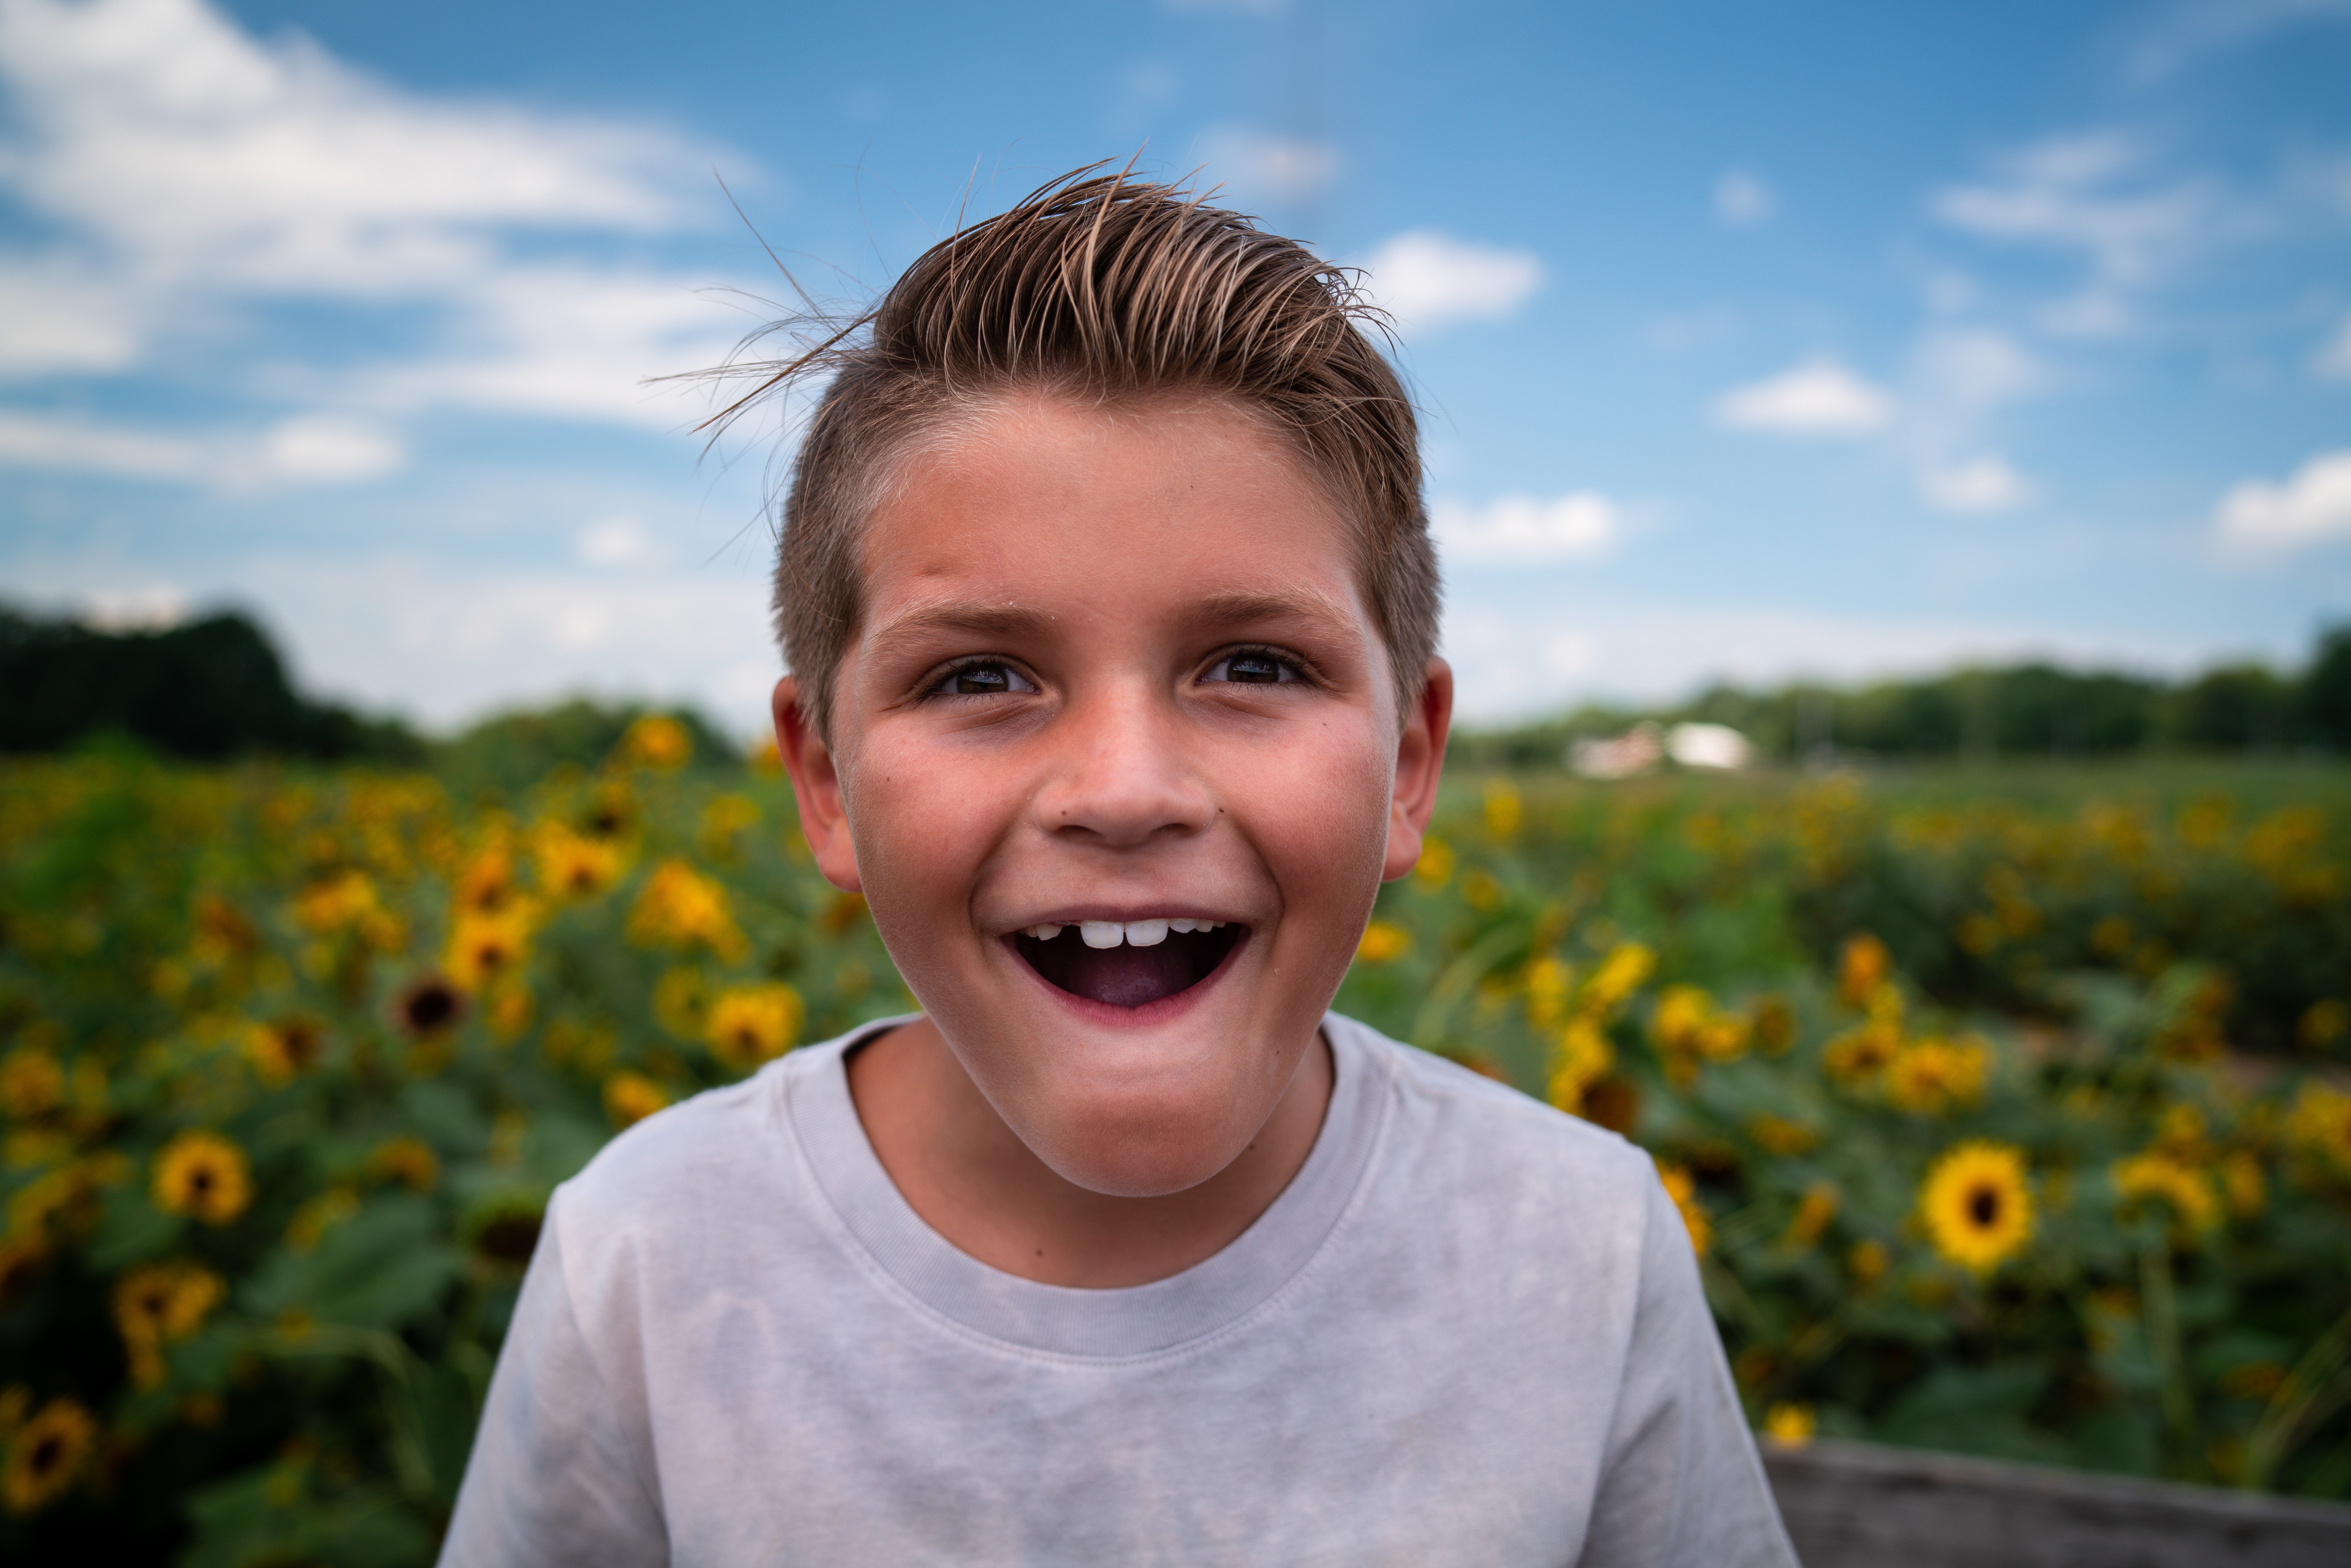 Smiling boy wearing a gray T-shirt outdoors | Source: Unsplash